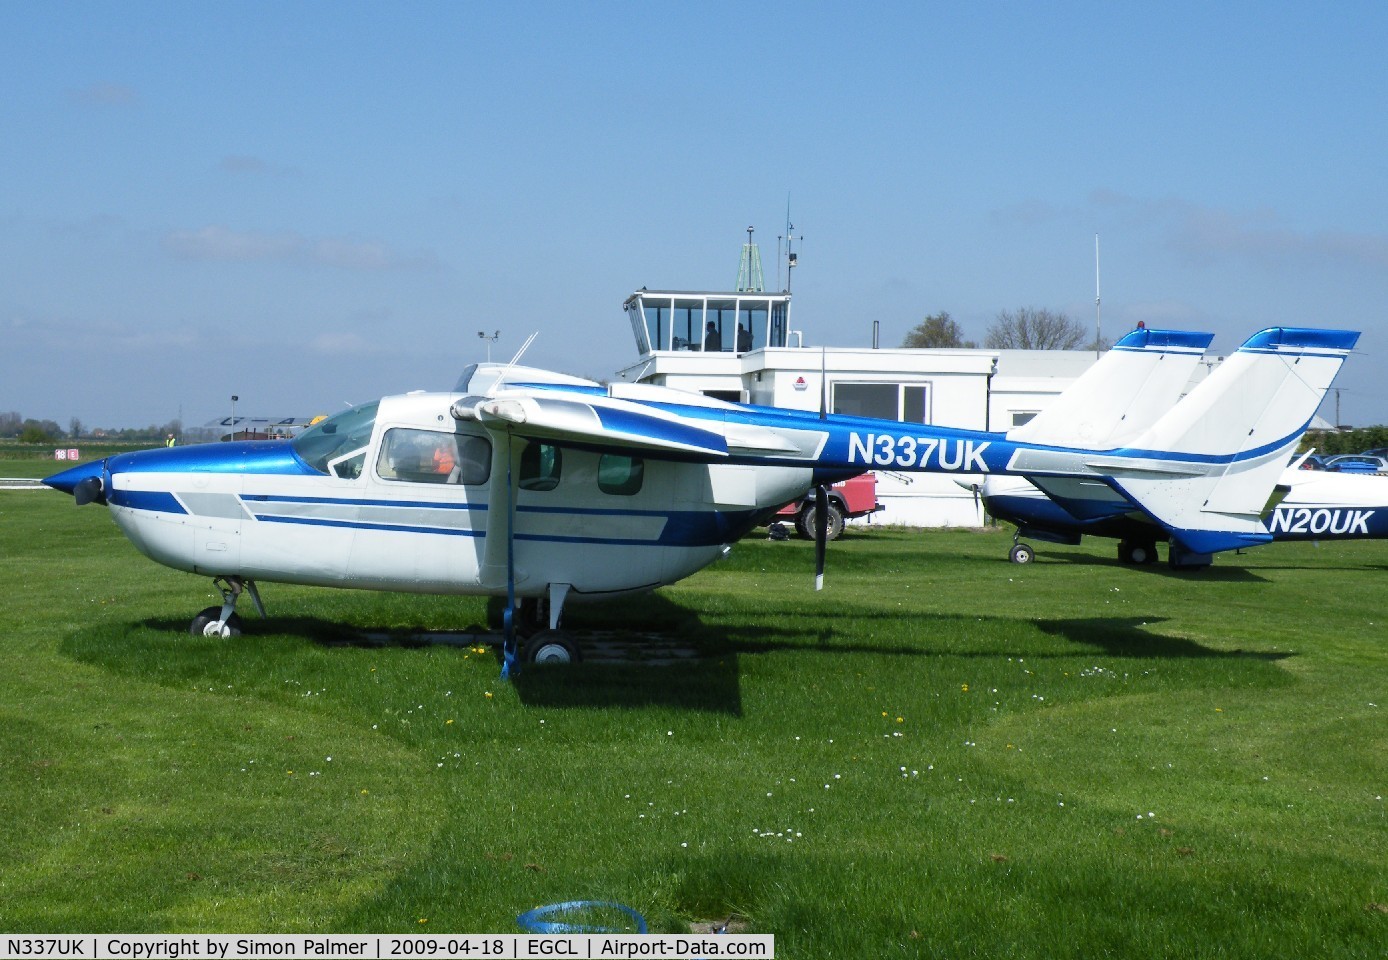 N337UK, Reims F337G C/N 0084, Cessna 337 seen at Fenland